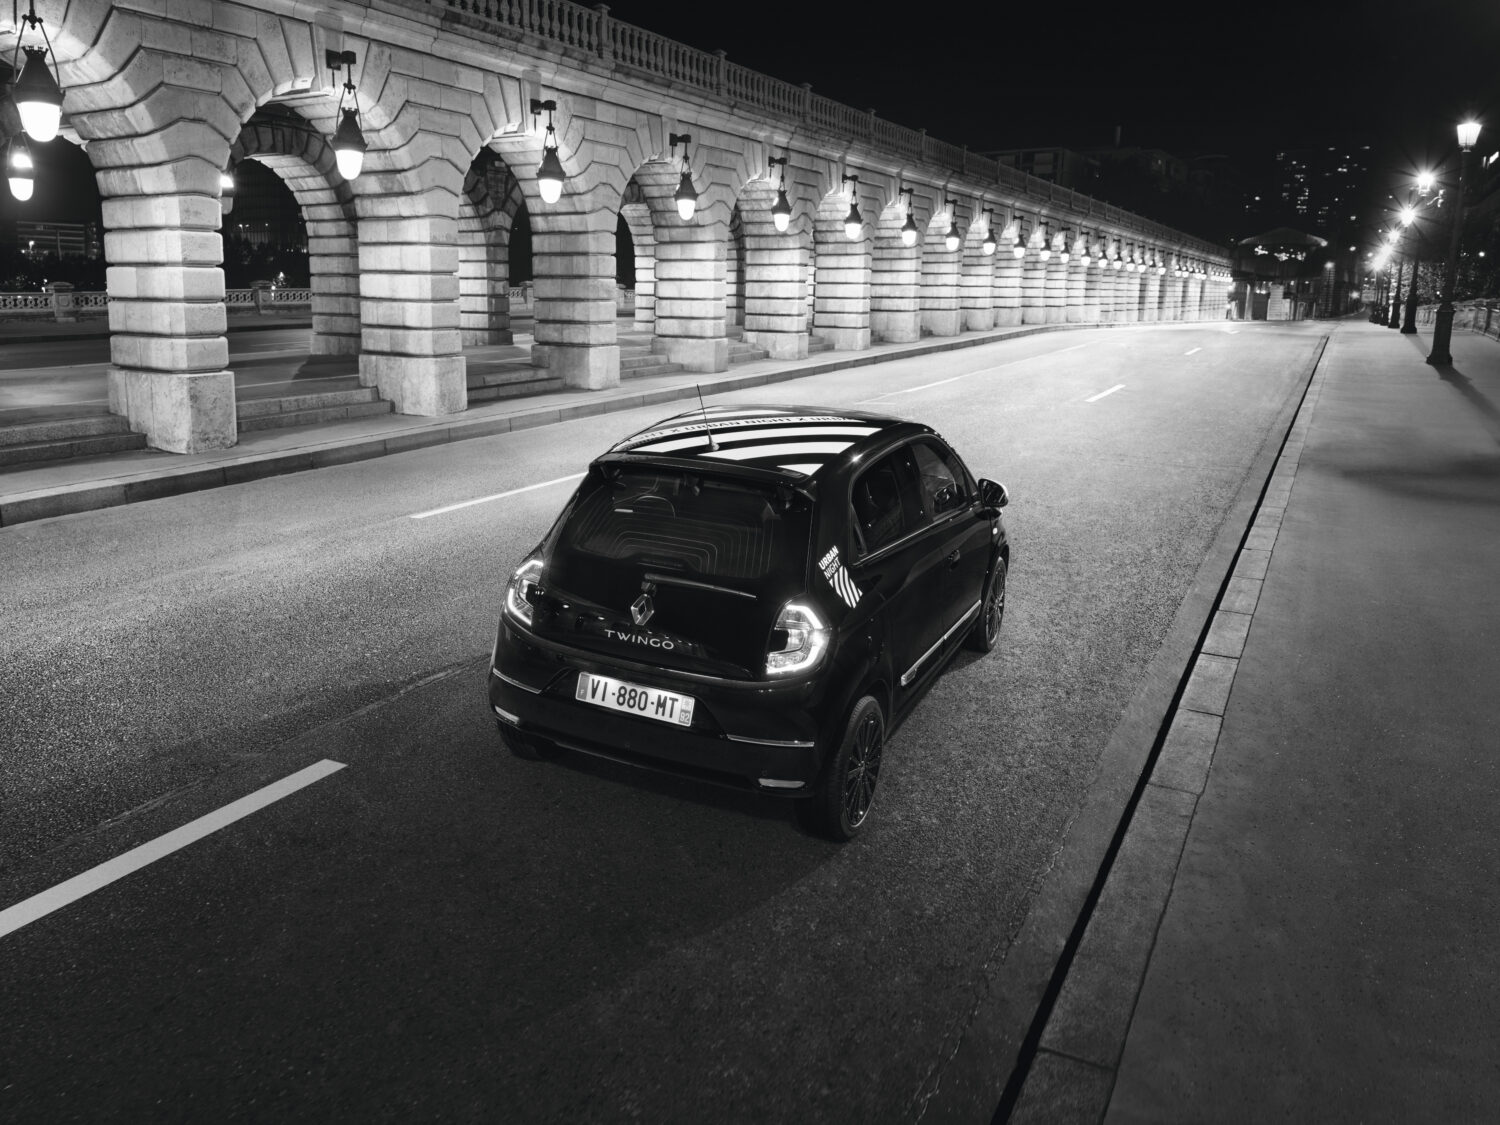 2021 - Renault Twingo Urban Night Limited Edition